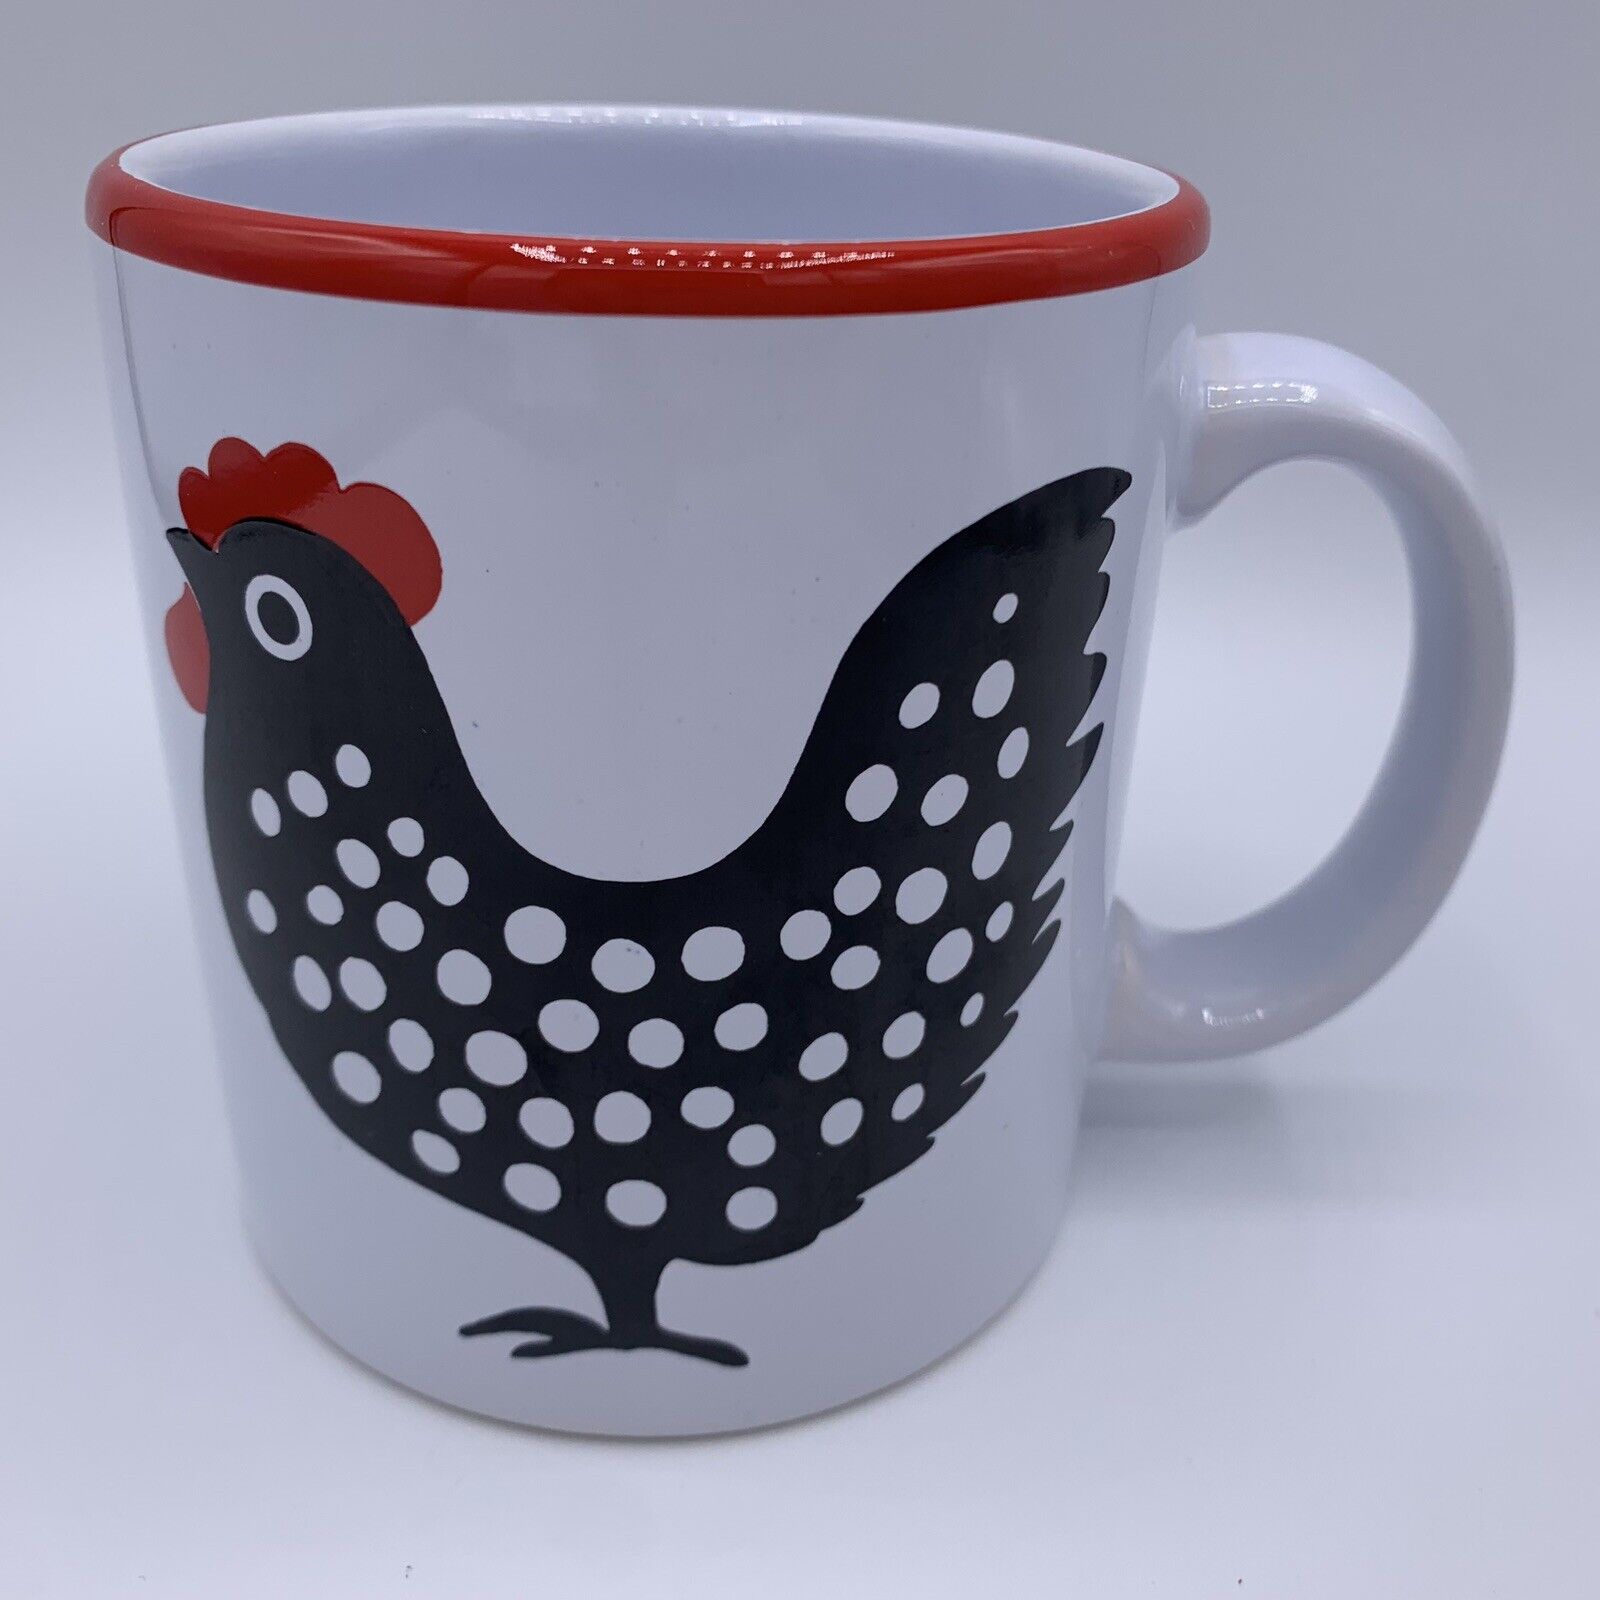 Vintage Waechtersbach Rooster/Chicken Farmhouse B&W Mug with Polka Dots